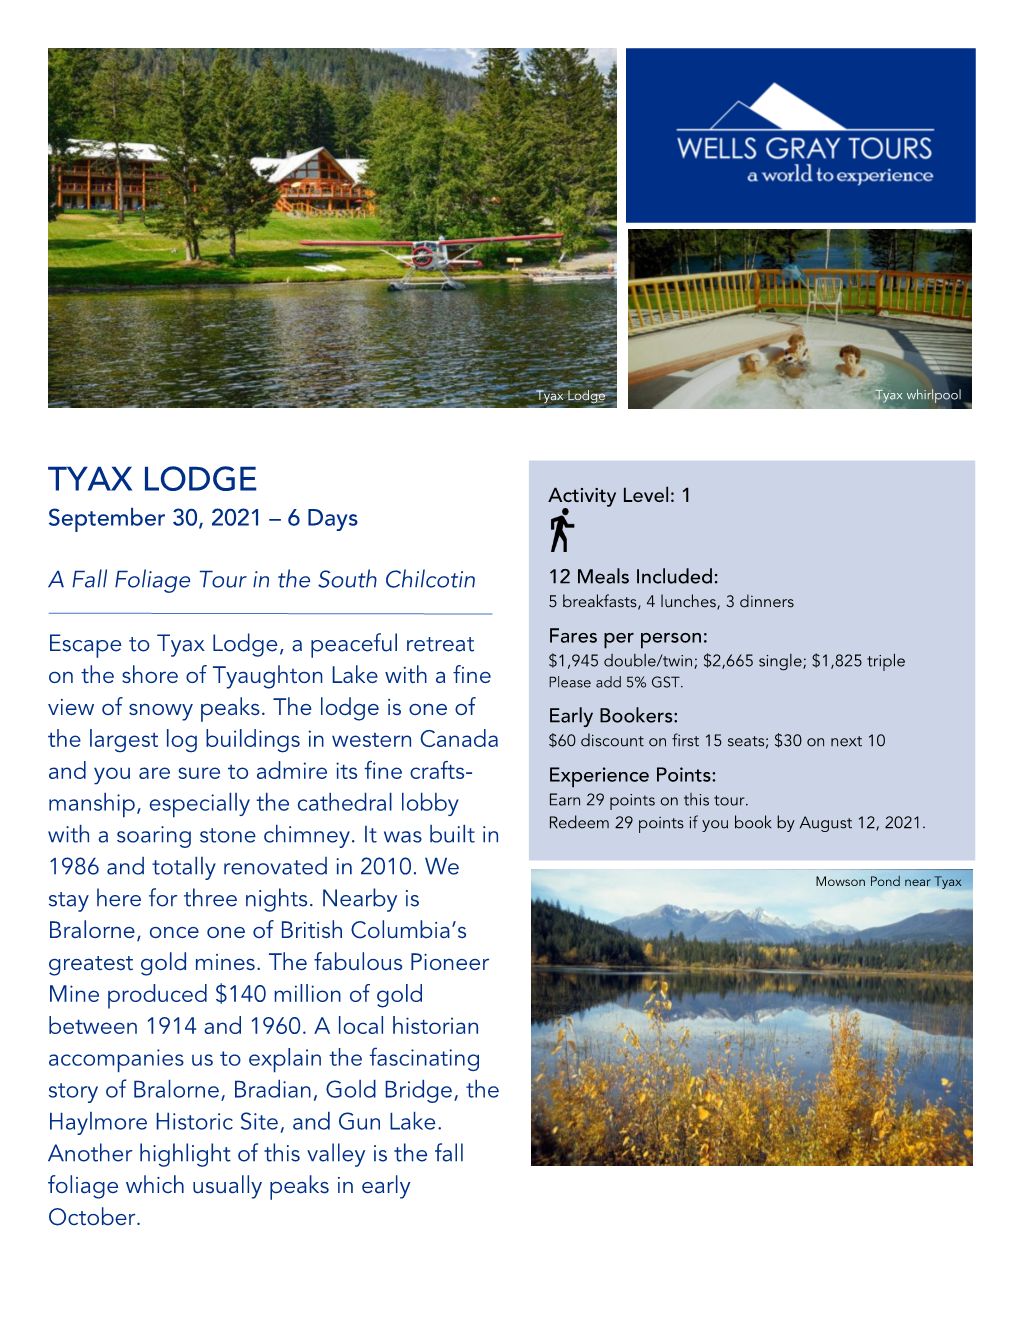 Tyax Lodge Tyax Whirlpool